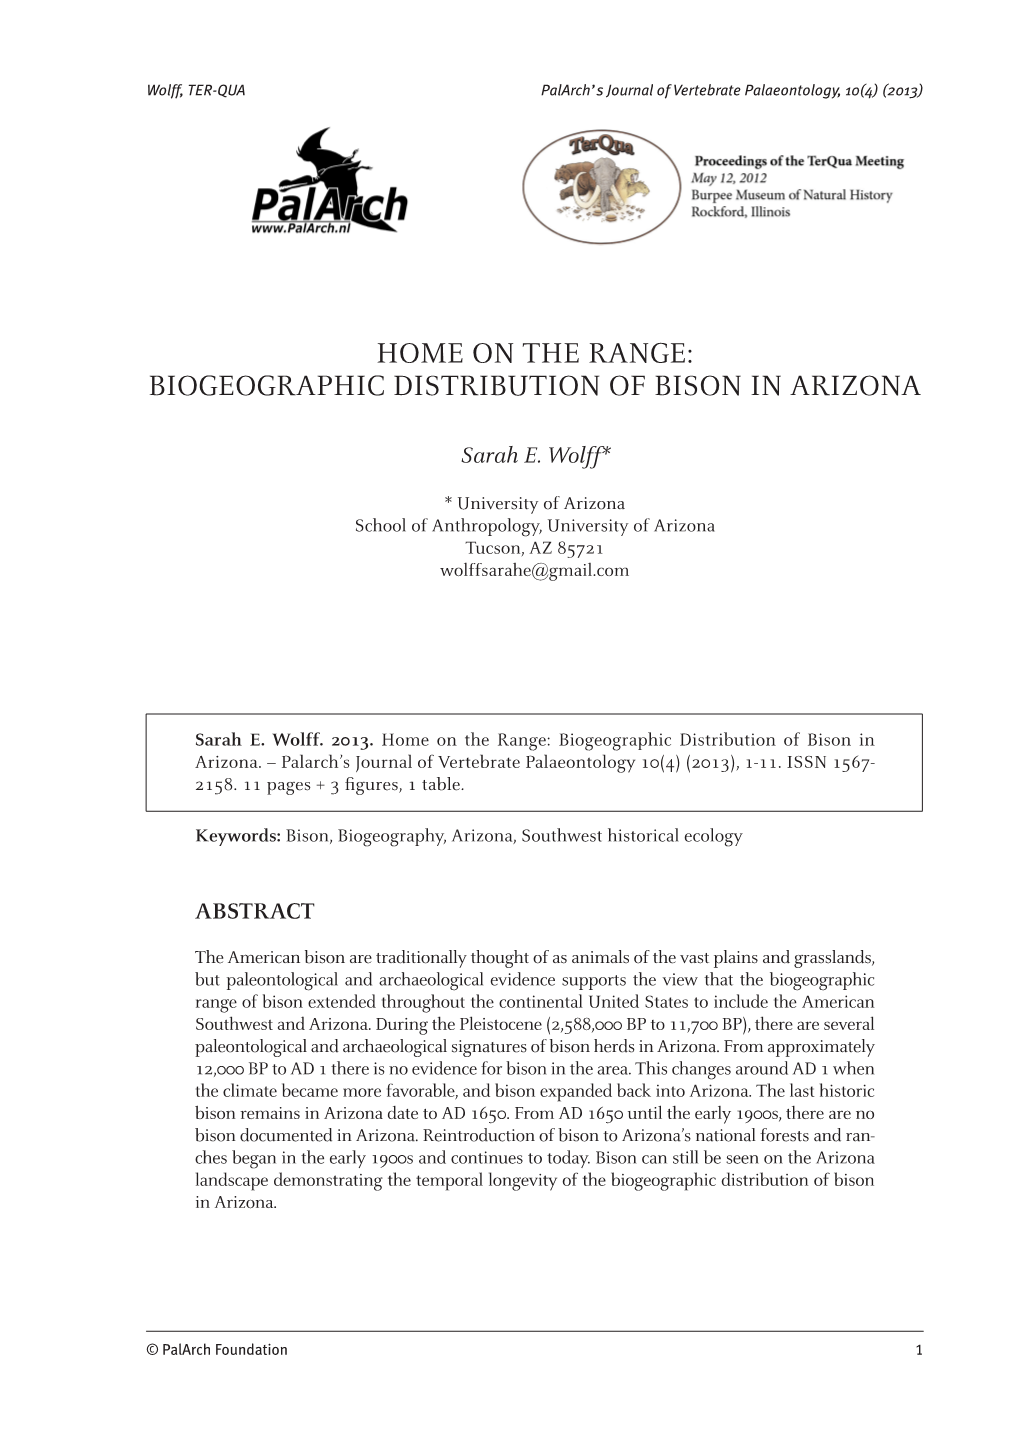 Biogeographic Distribution of Bison in Arizona